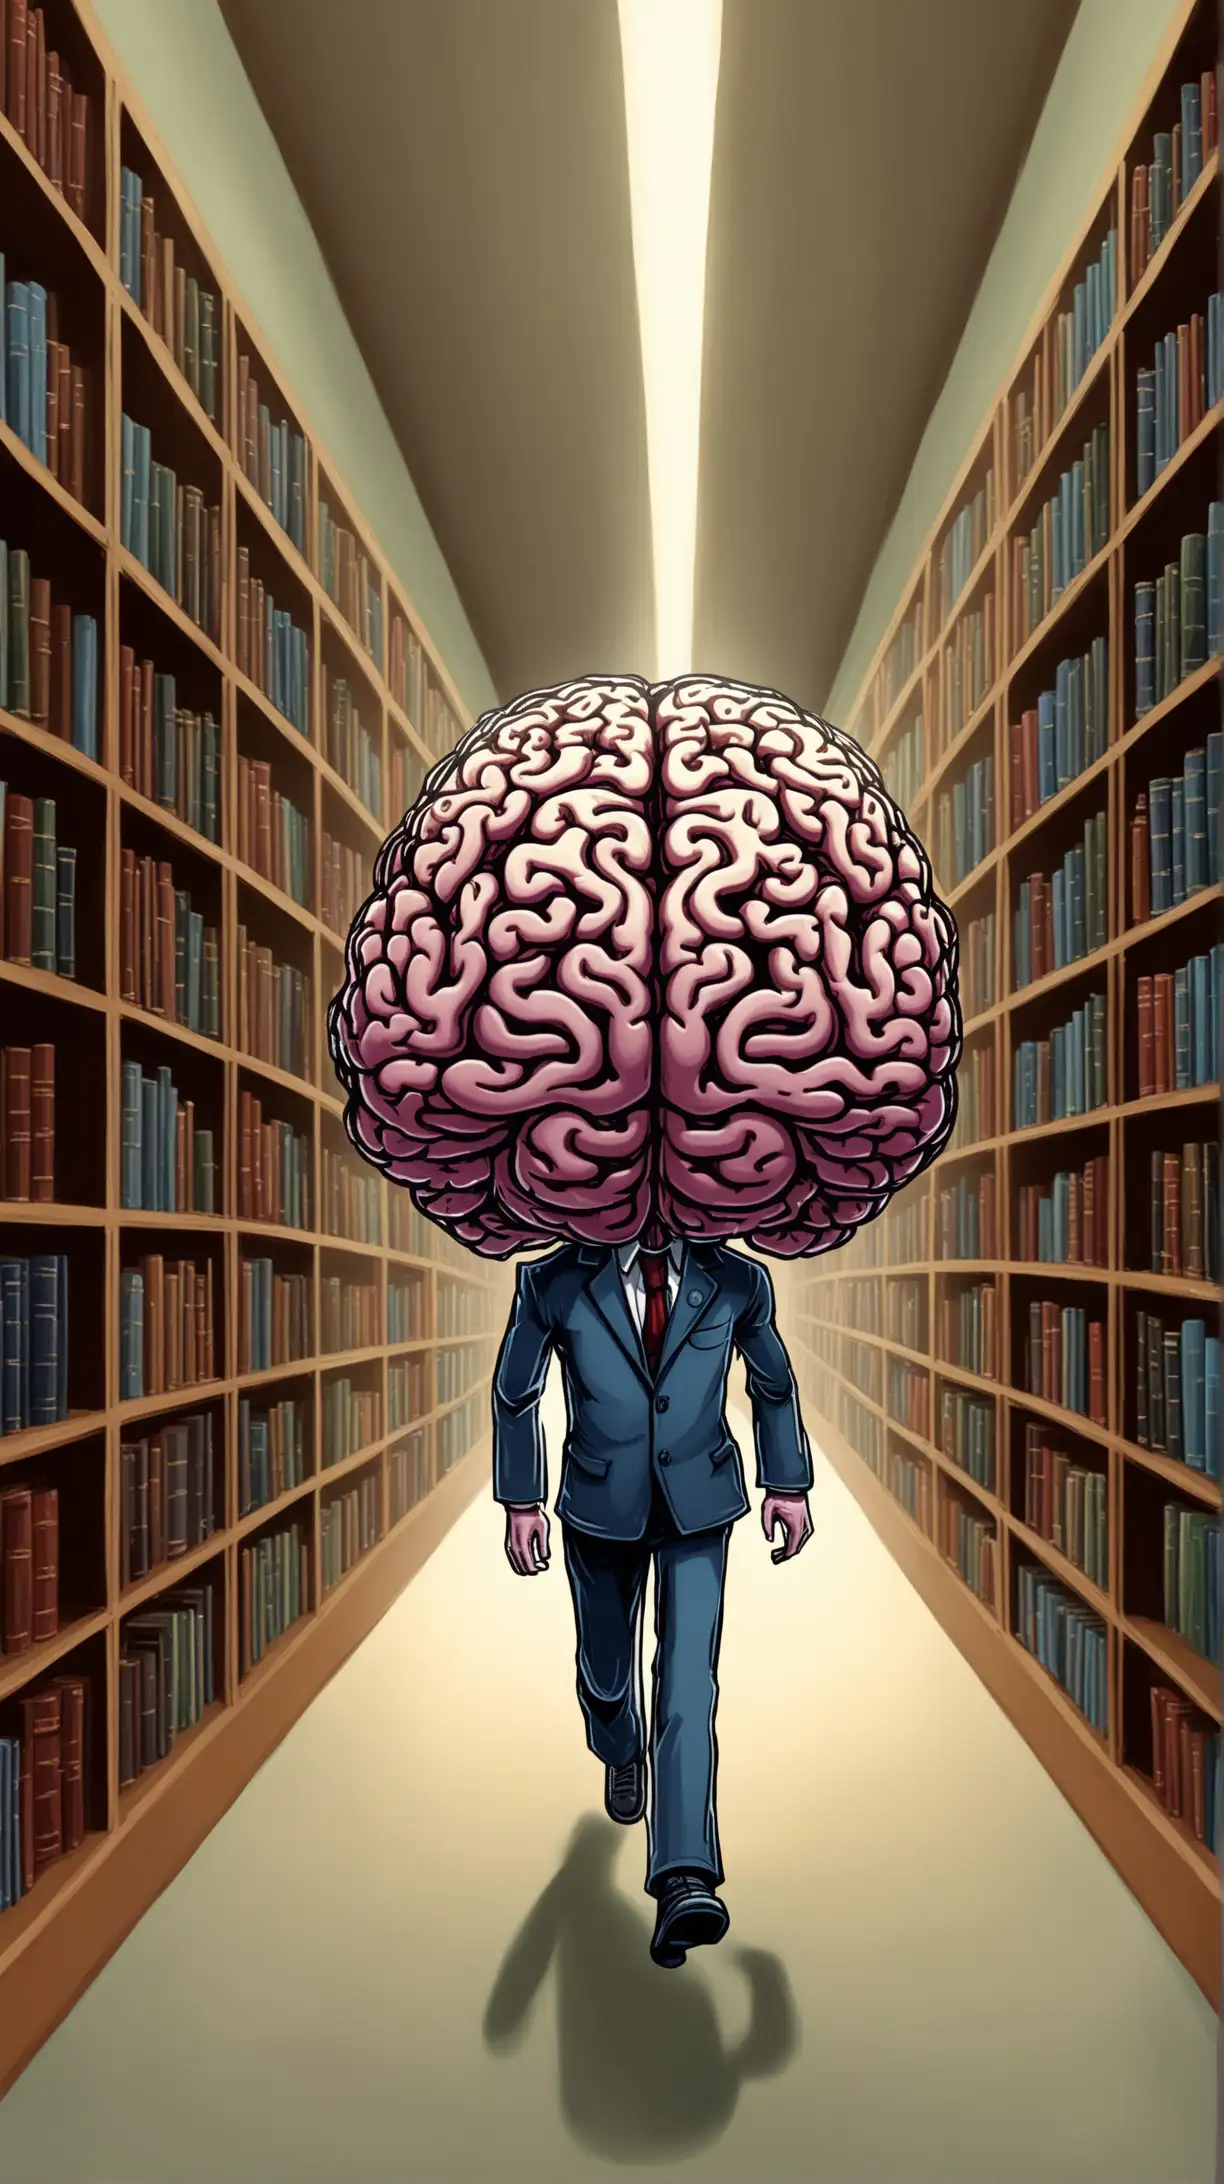 Anthropomorphic Brain Conducting Mental Inventory in BrainLike Library